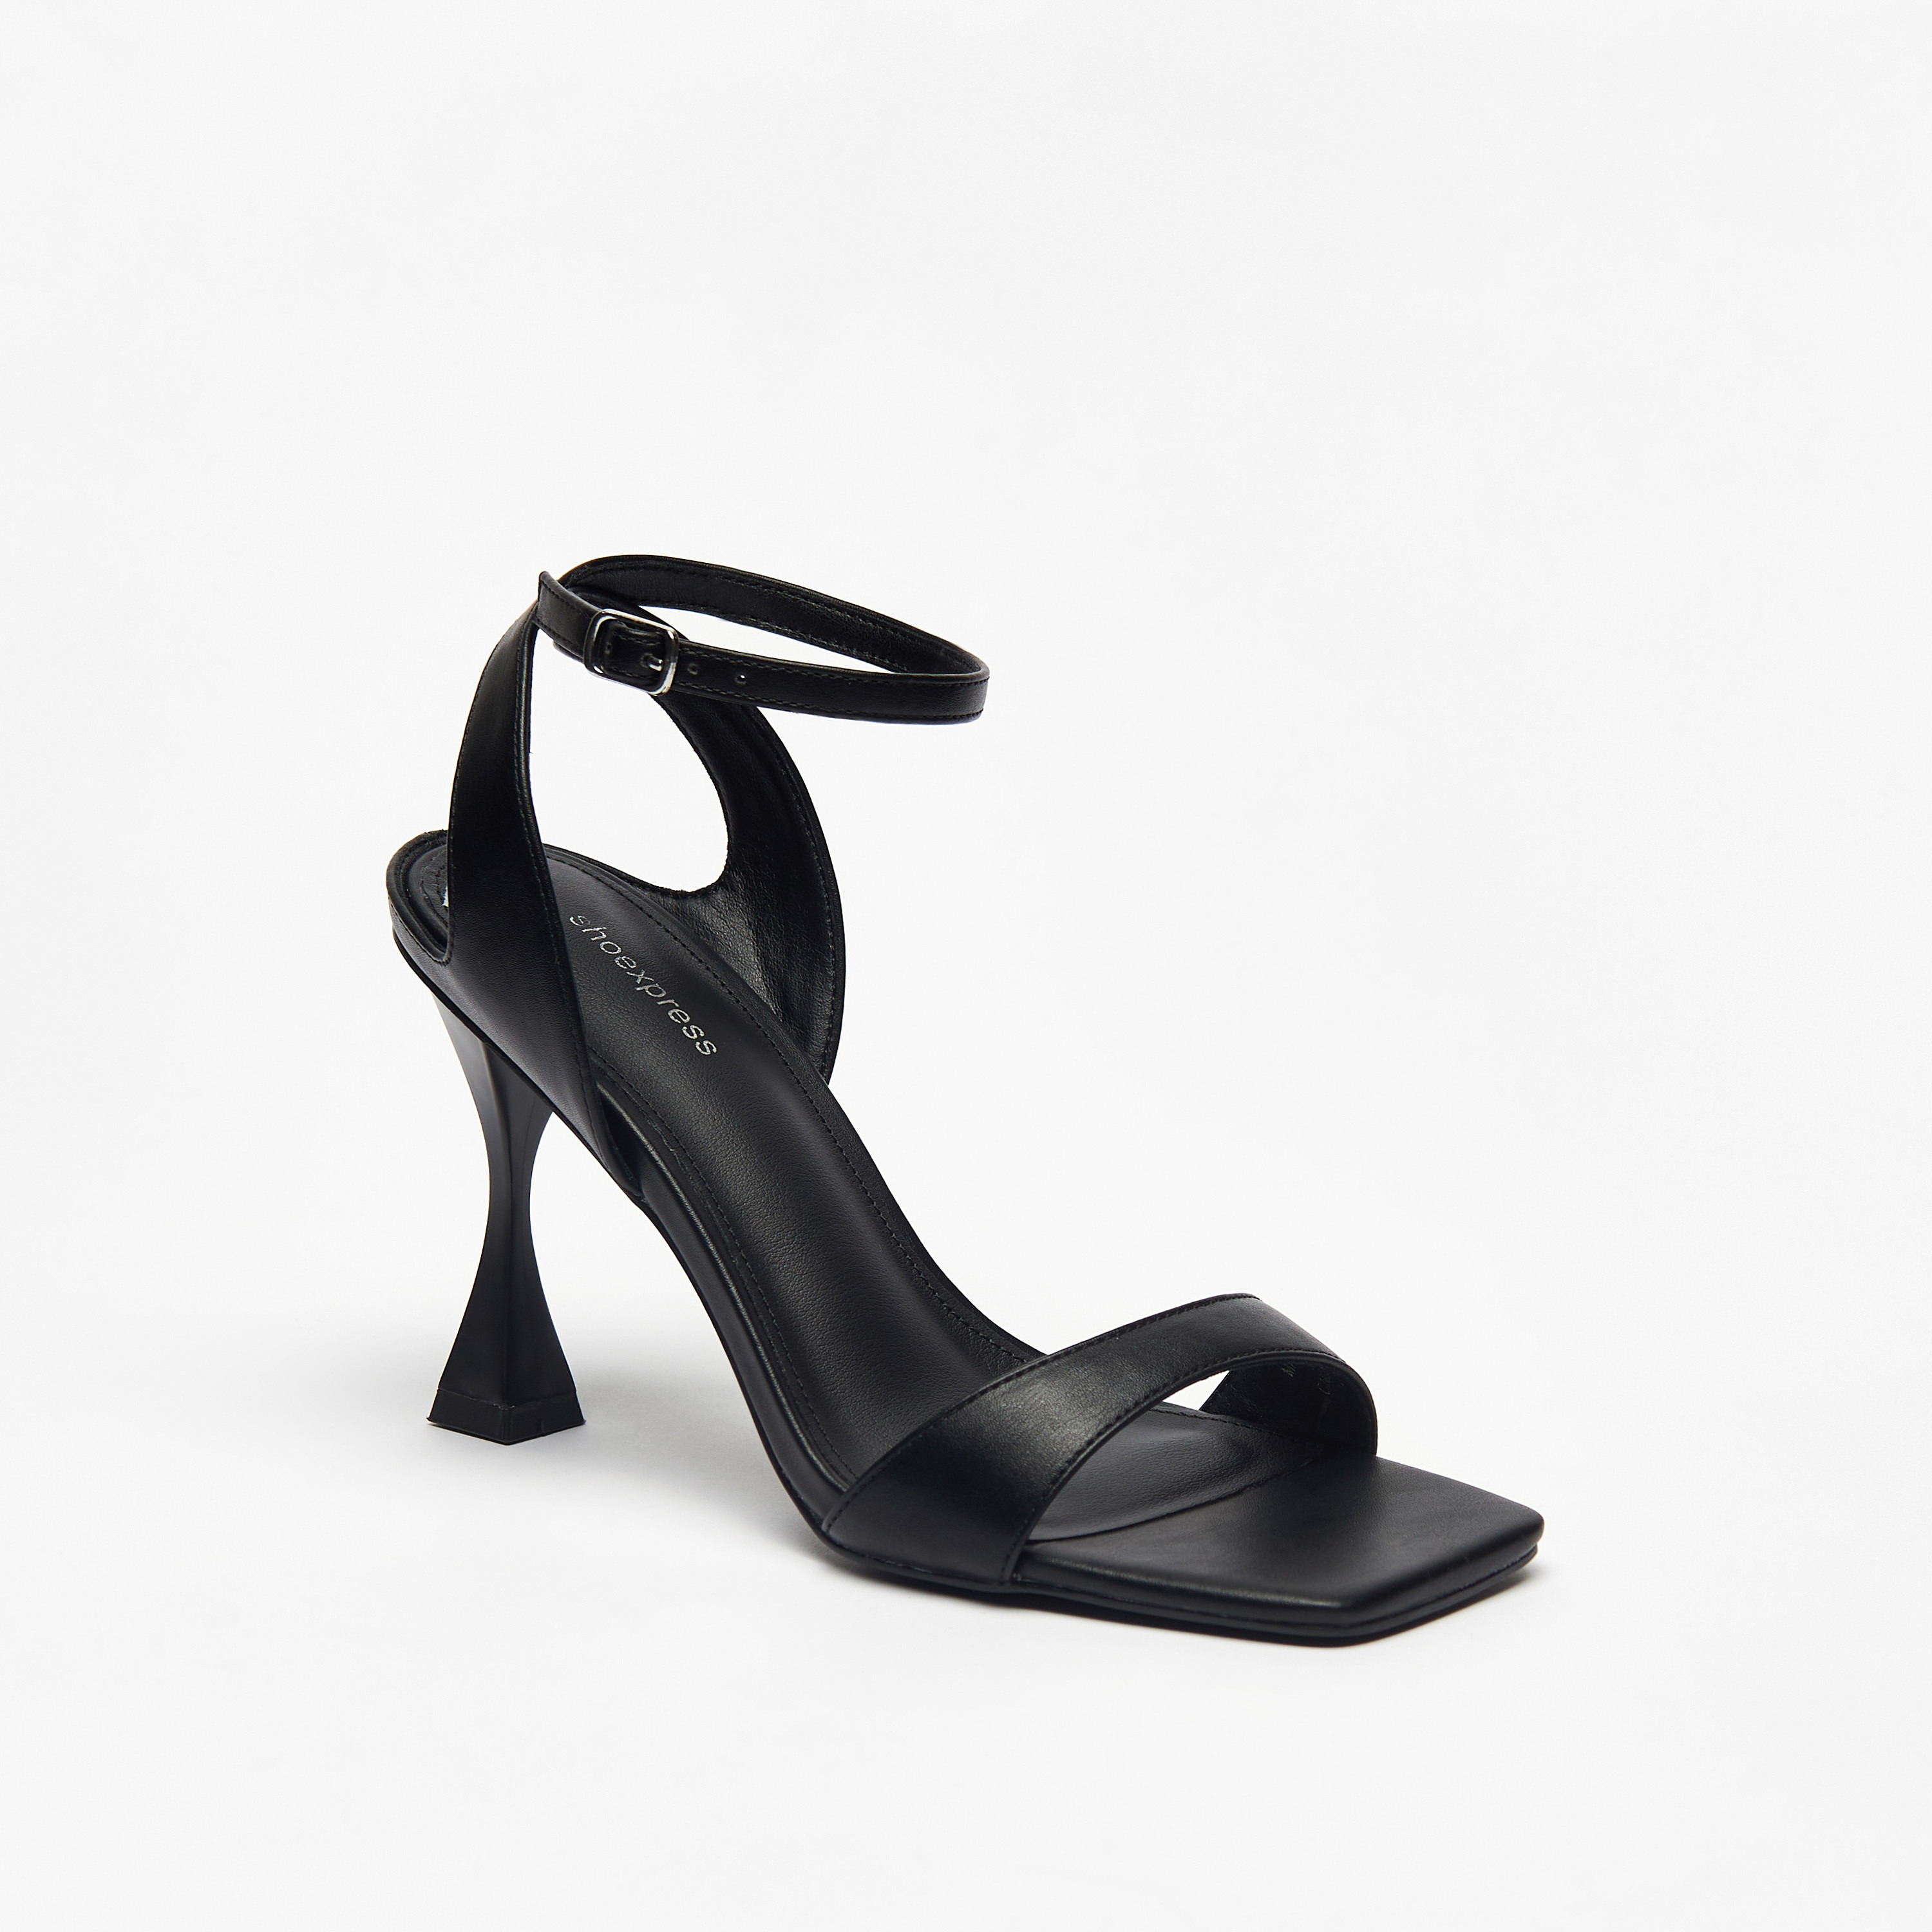 Buy Best point+toe+snakeskin+stiletto+heels Online At Cheap Price,  point+toe+snakeskin+stiletto+heels & Qatar Shopping